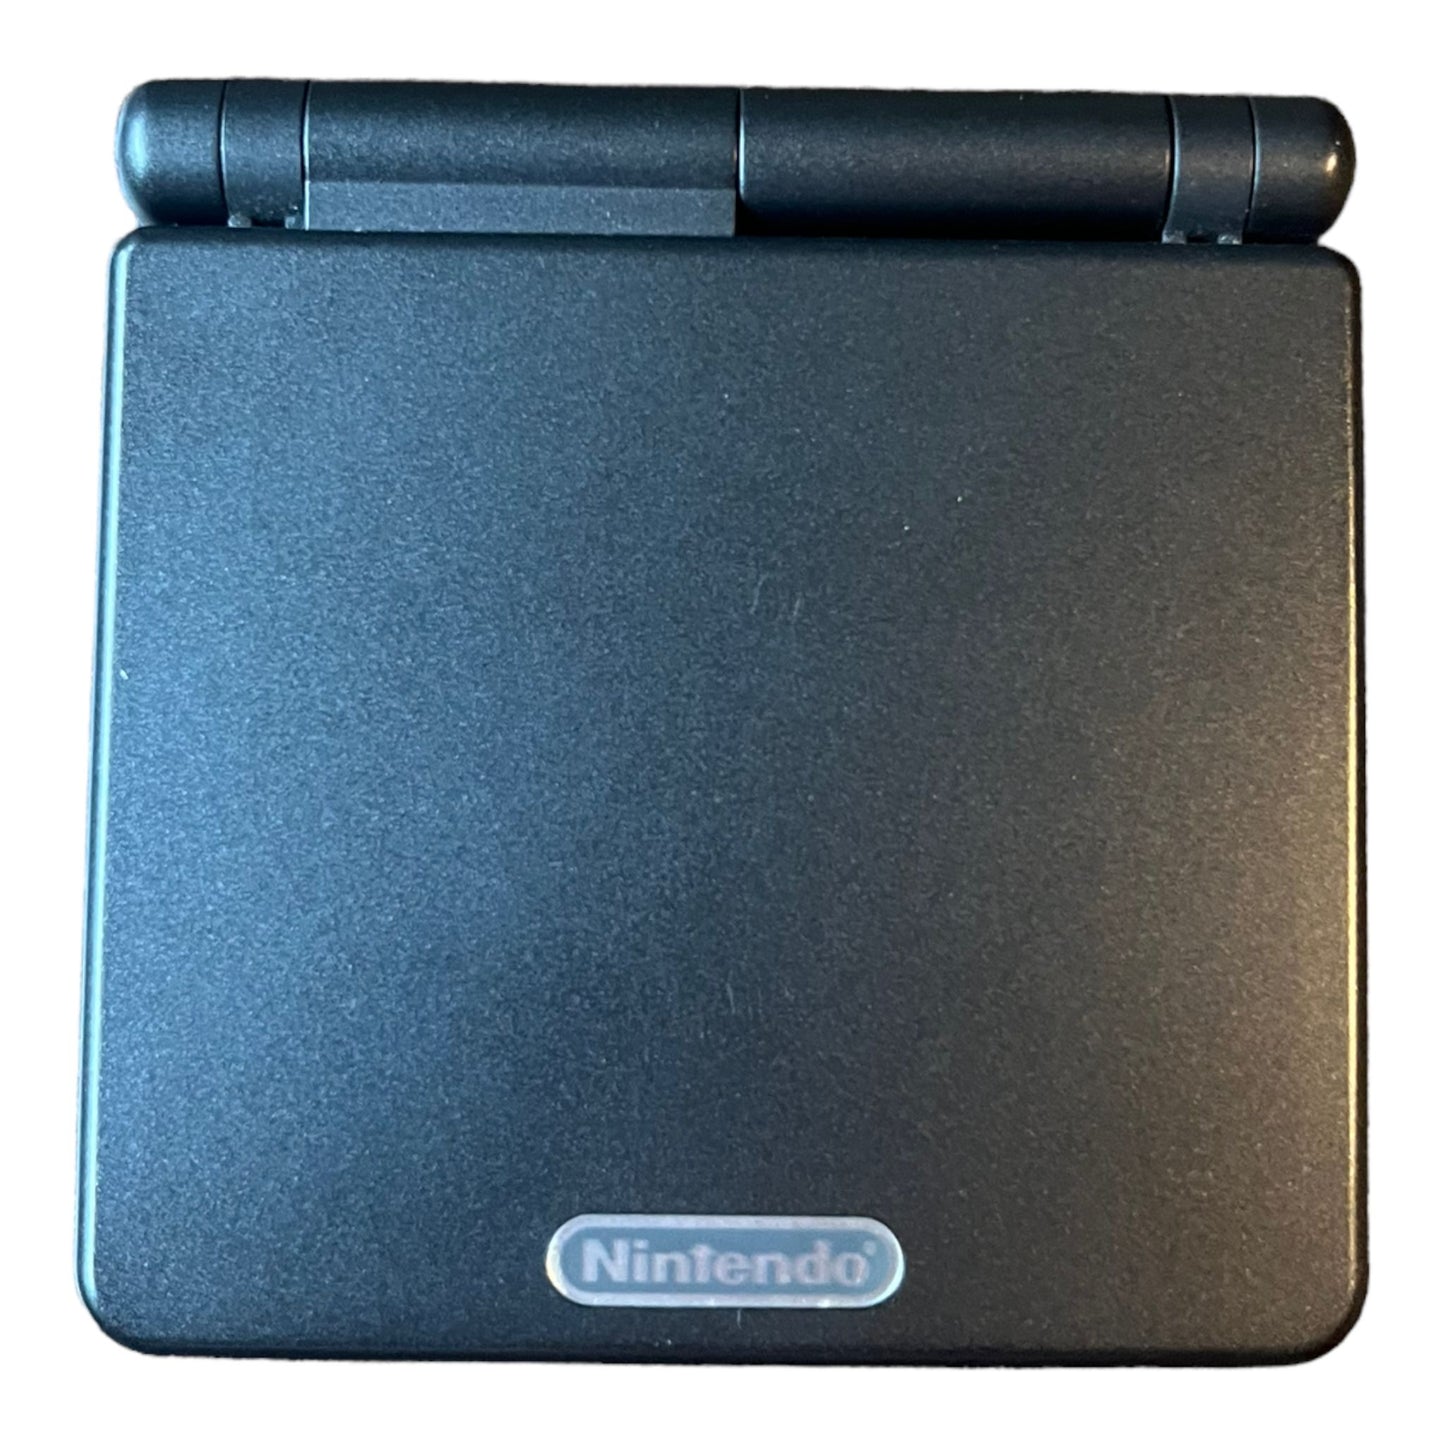 Gameboy Advance SP Black [CIB]